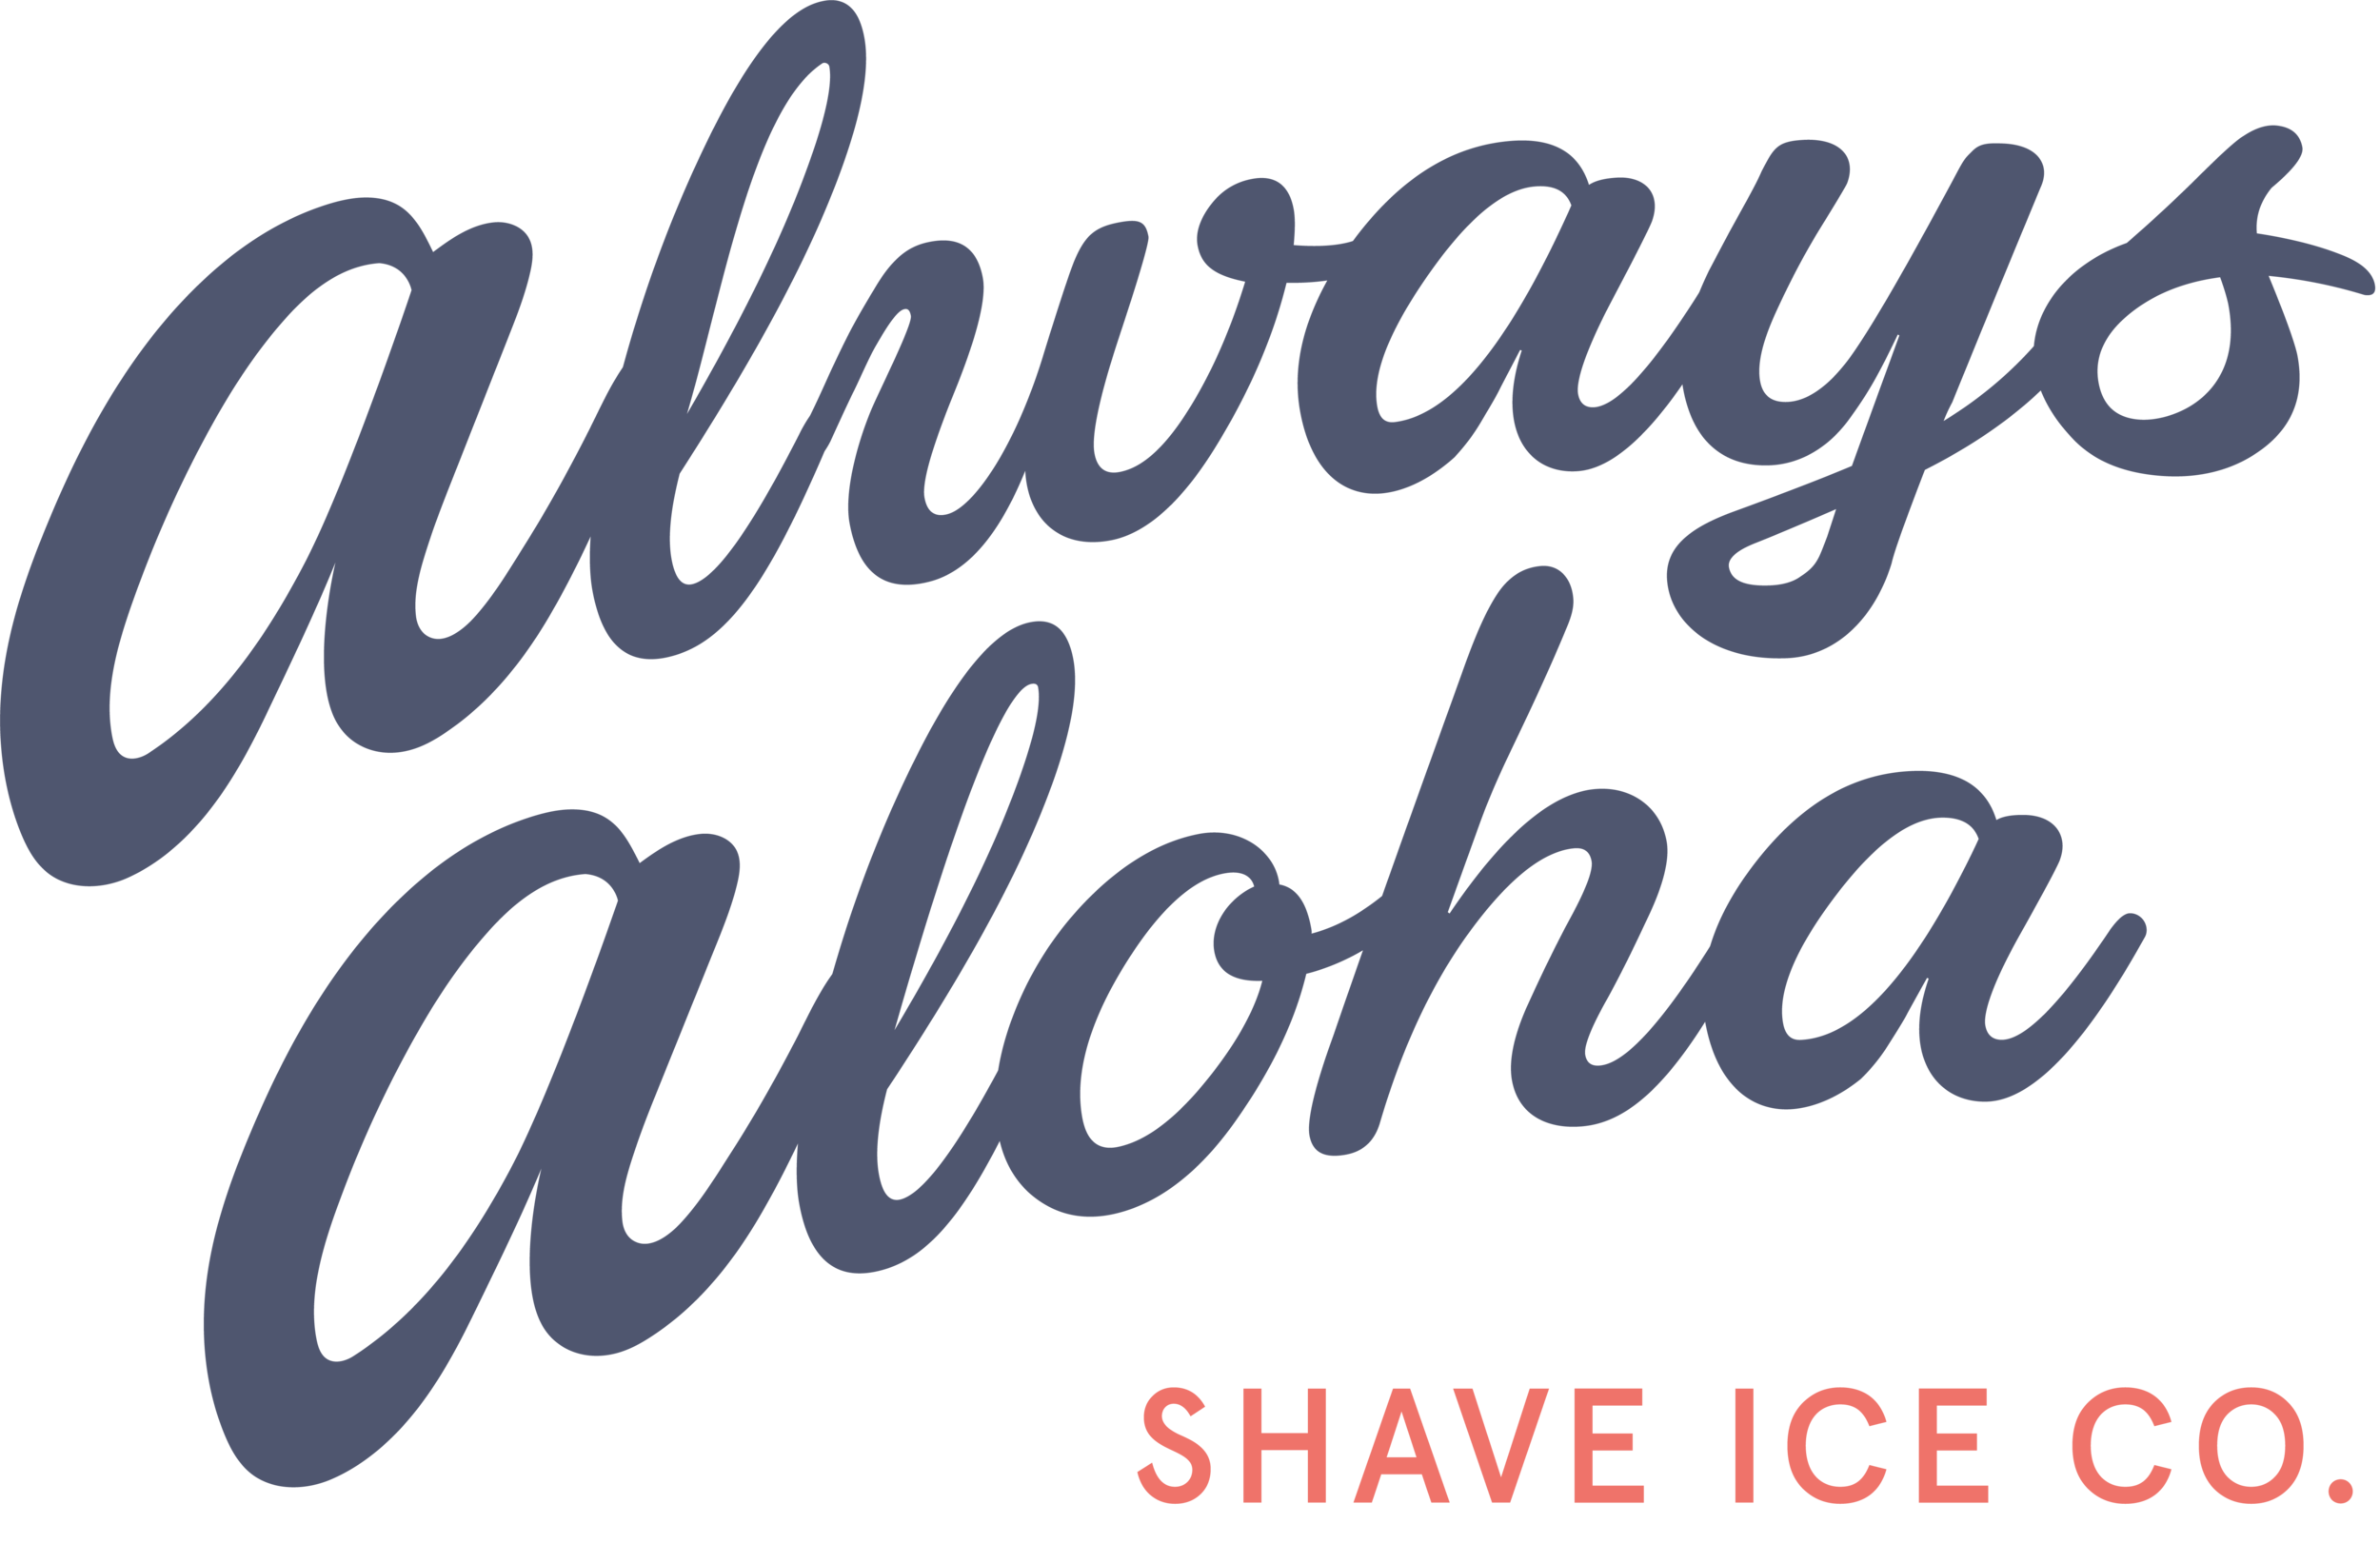 Always Aloha Shave Ice Co.